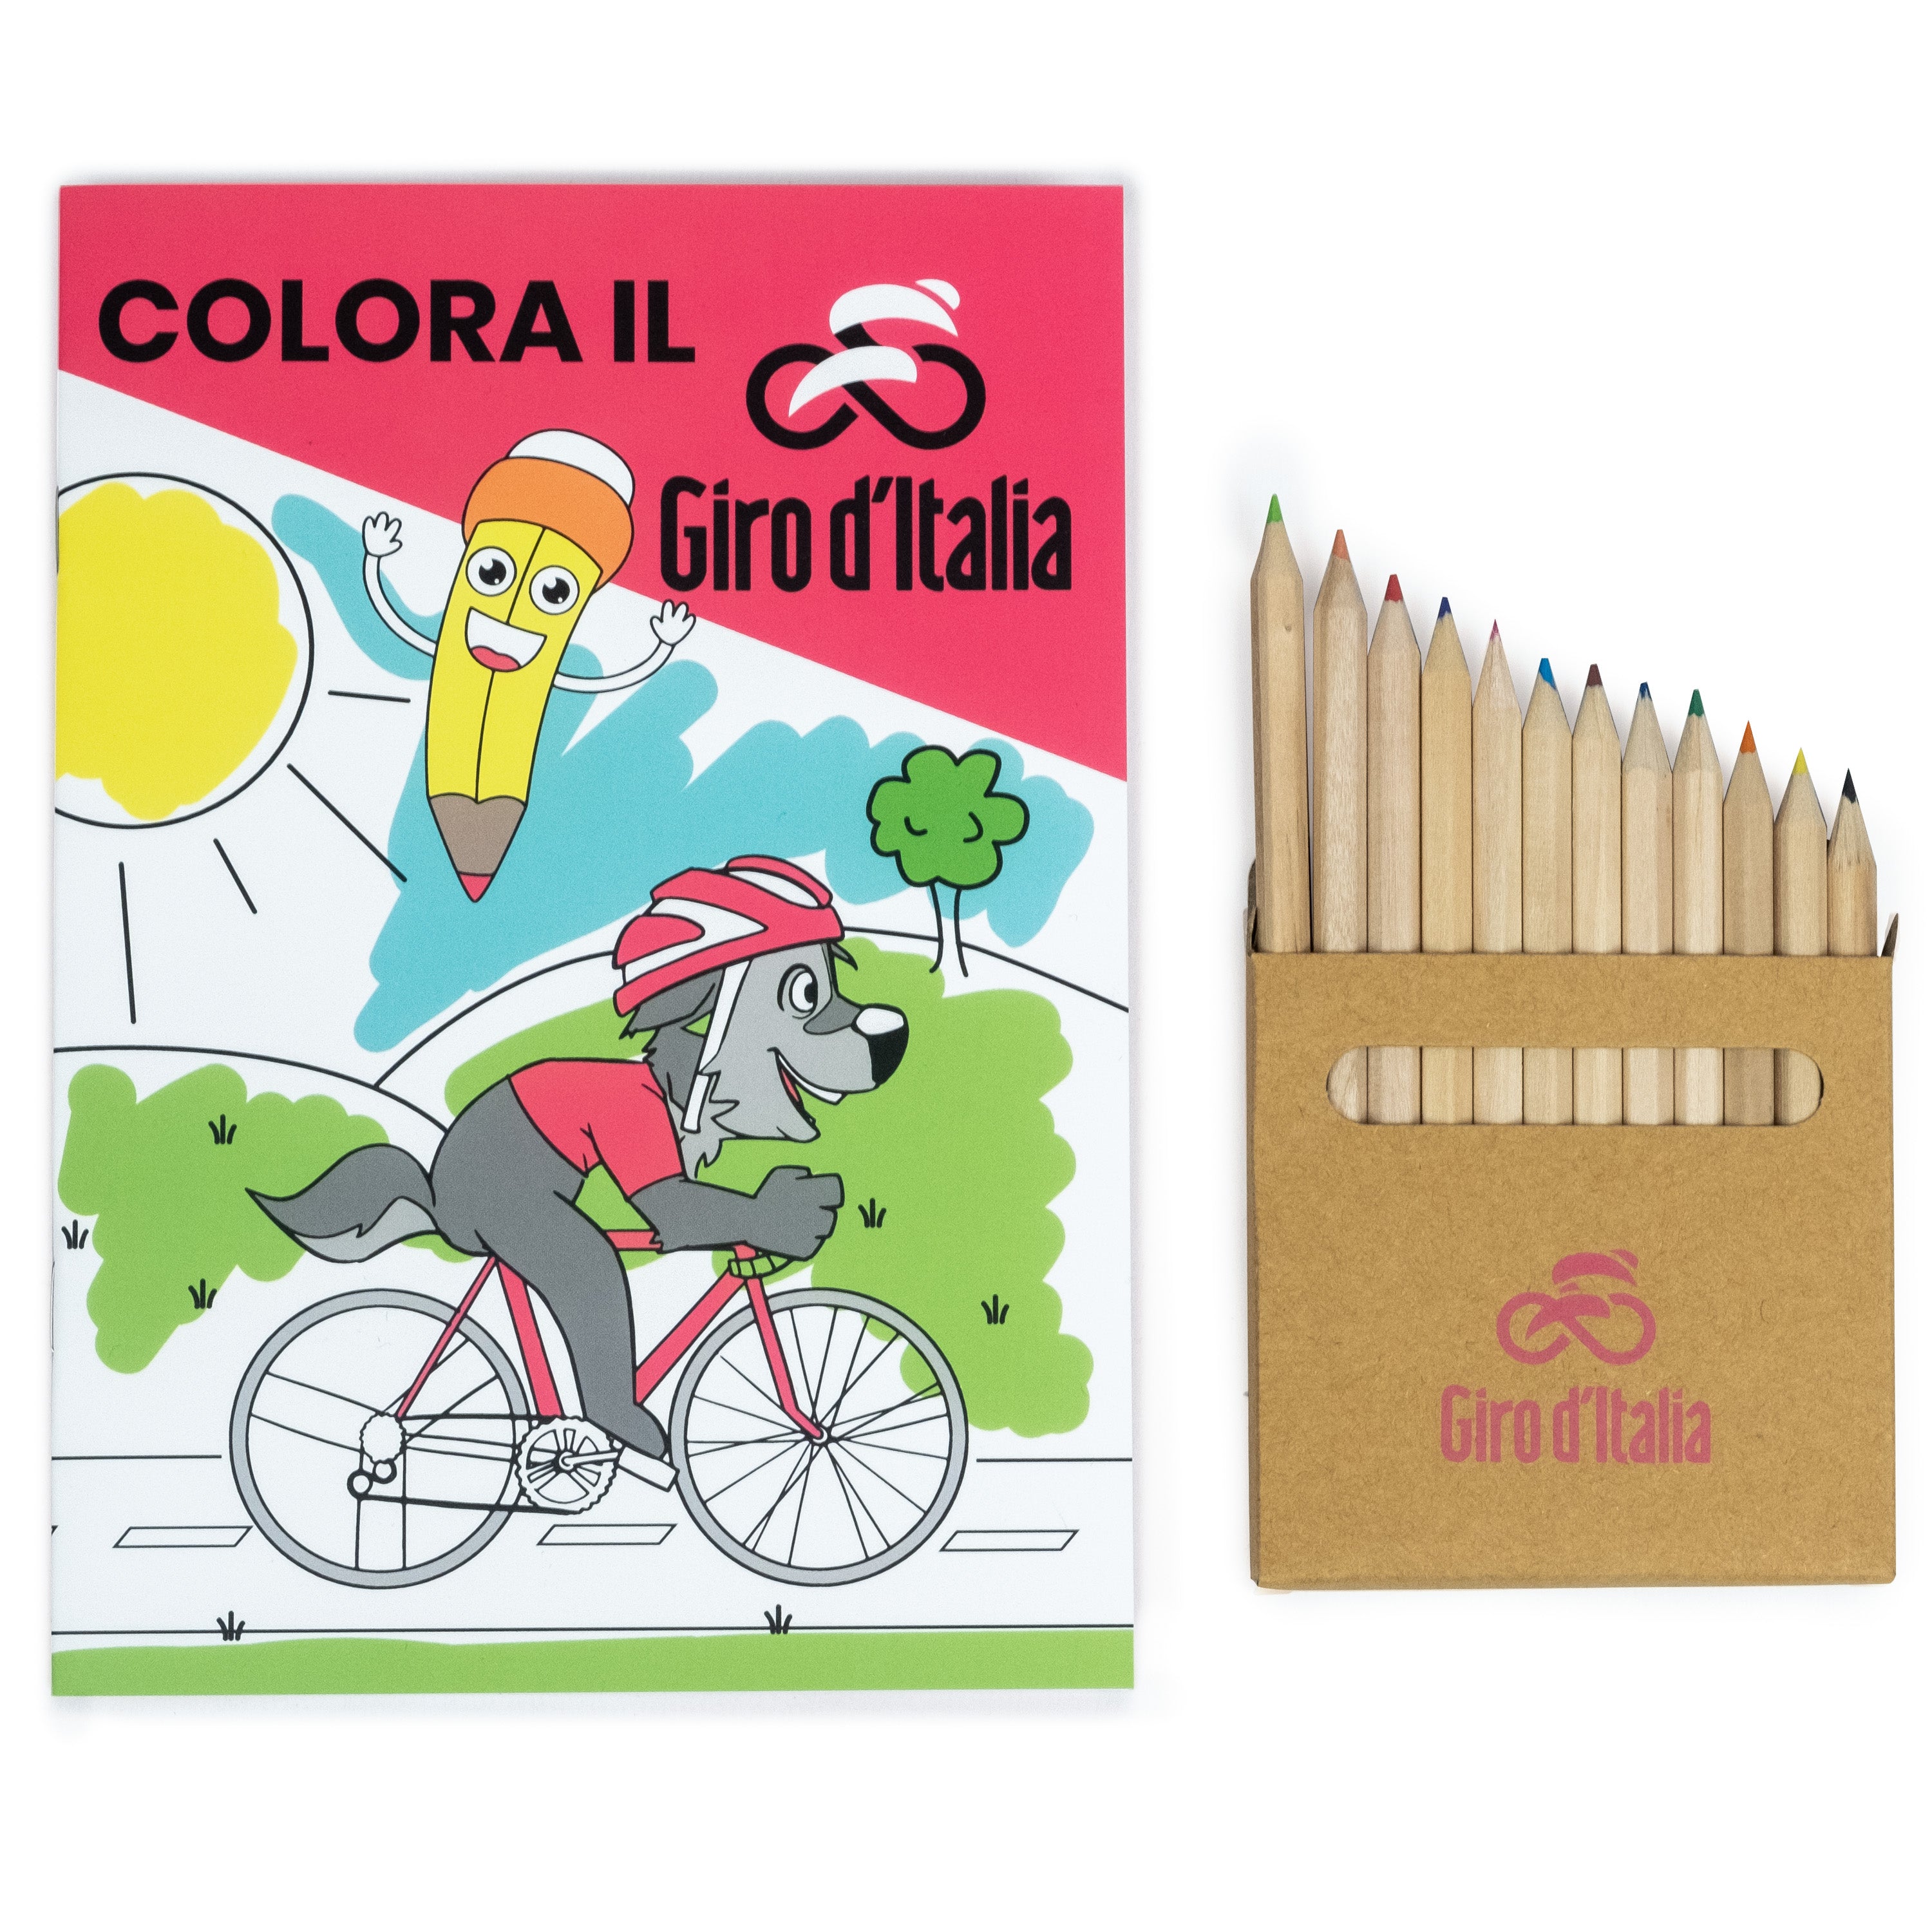 Illustrated coloring book Giro D'italia